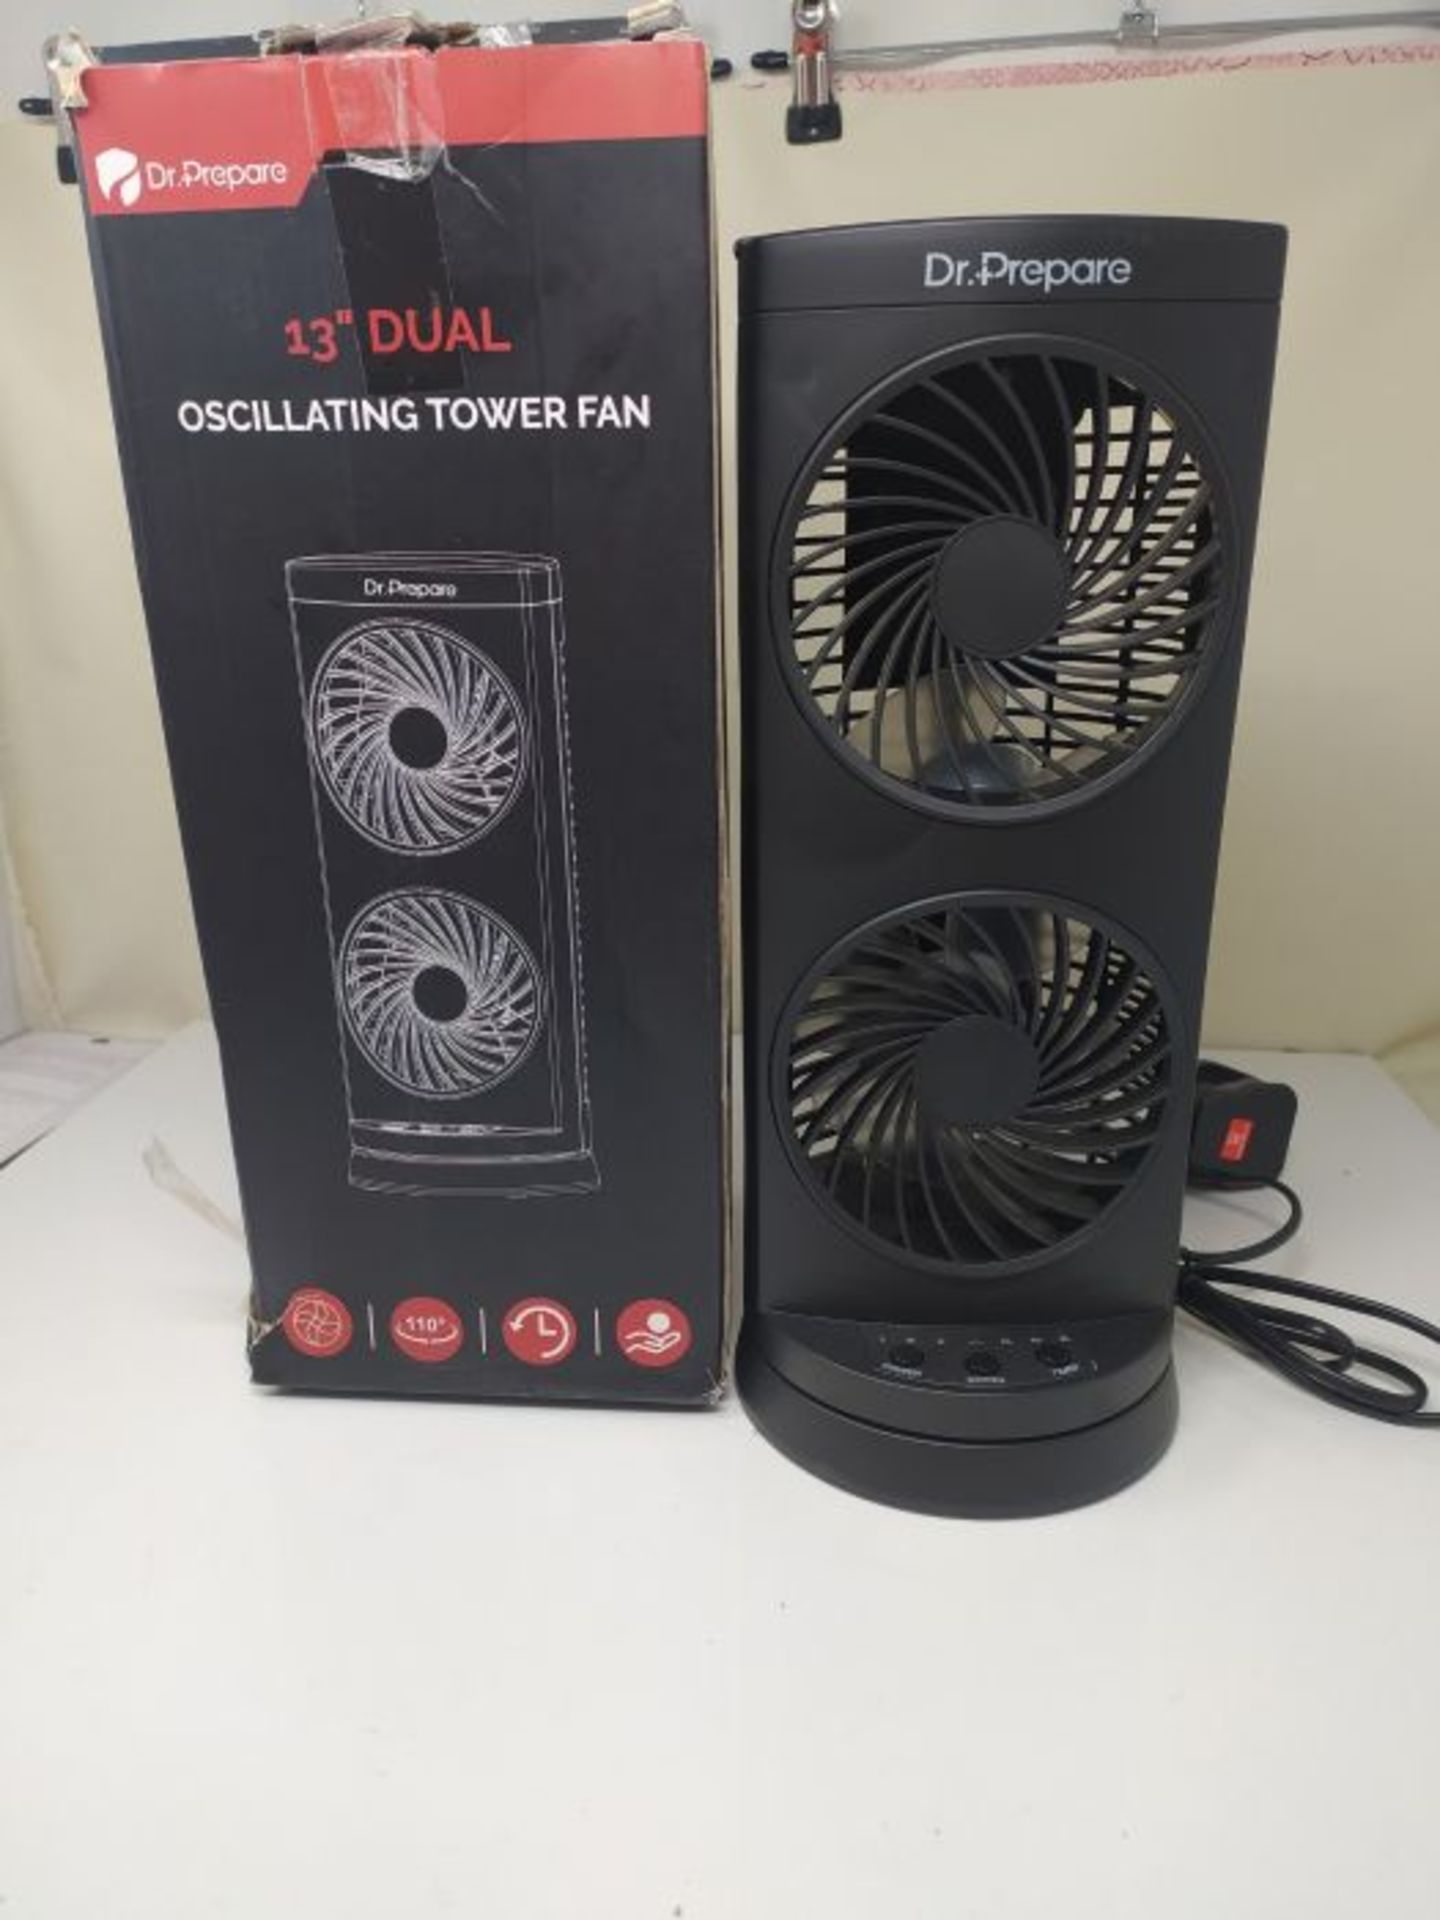 Dr. Prepare Tower Fan Oscillating Fan, Portable Desk Fan with 3-Speed Options, 110° O - Image 2 of 2